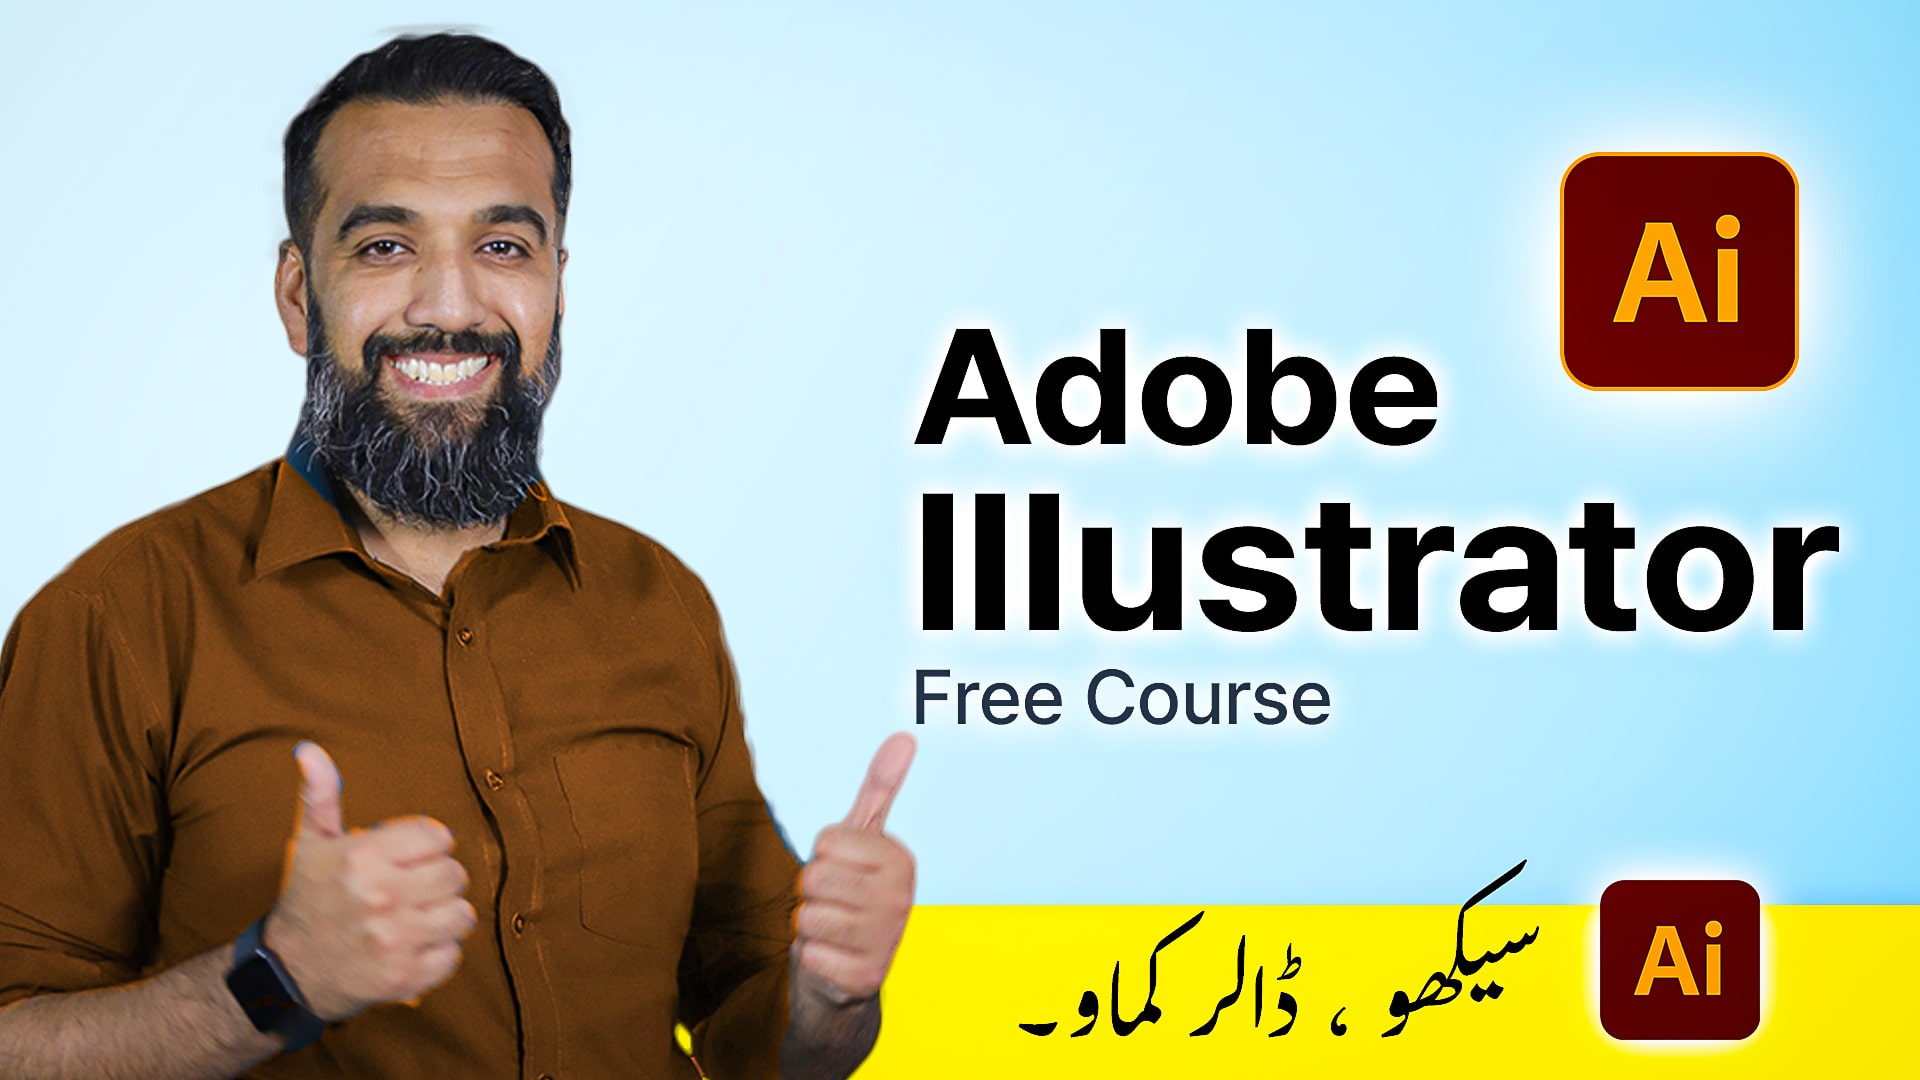  adobe-illustrator-course-for-beginners-graphic-desginer-by-azadchaiwala-64f858b8a7618911712362.jpg 